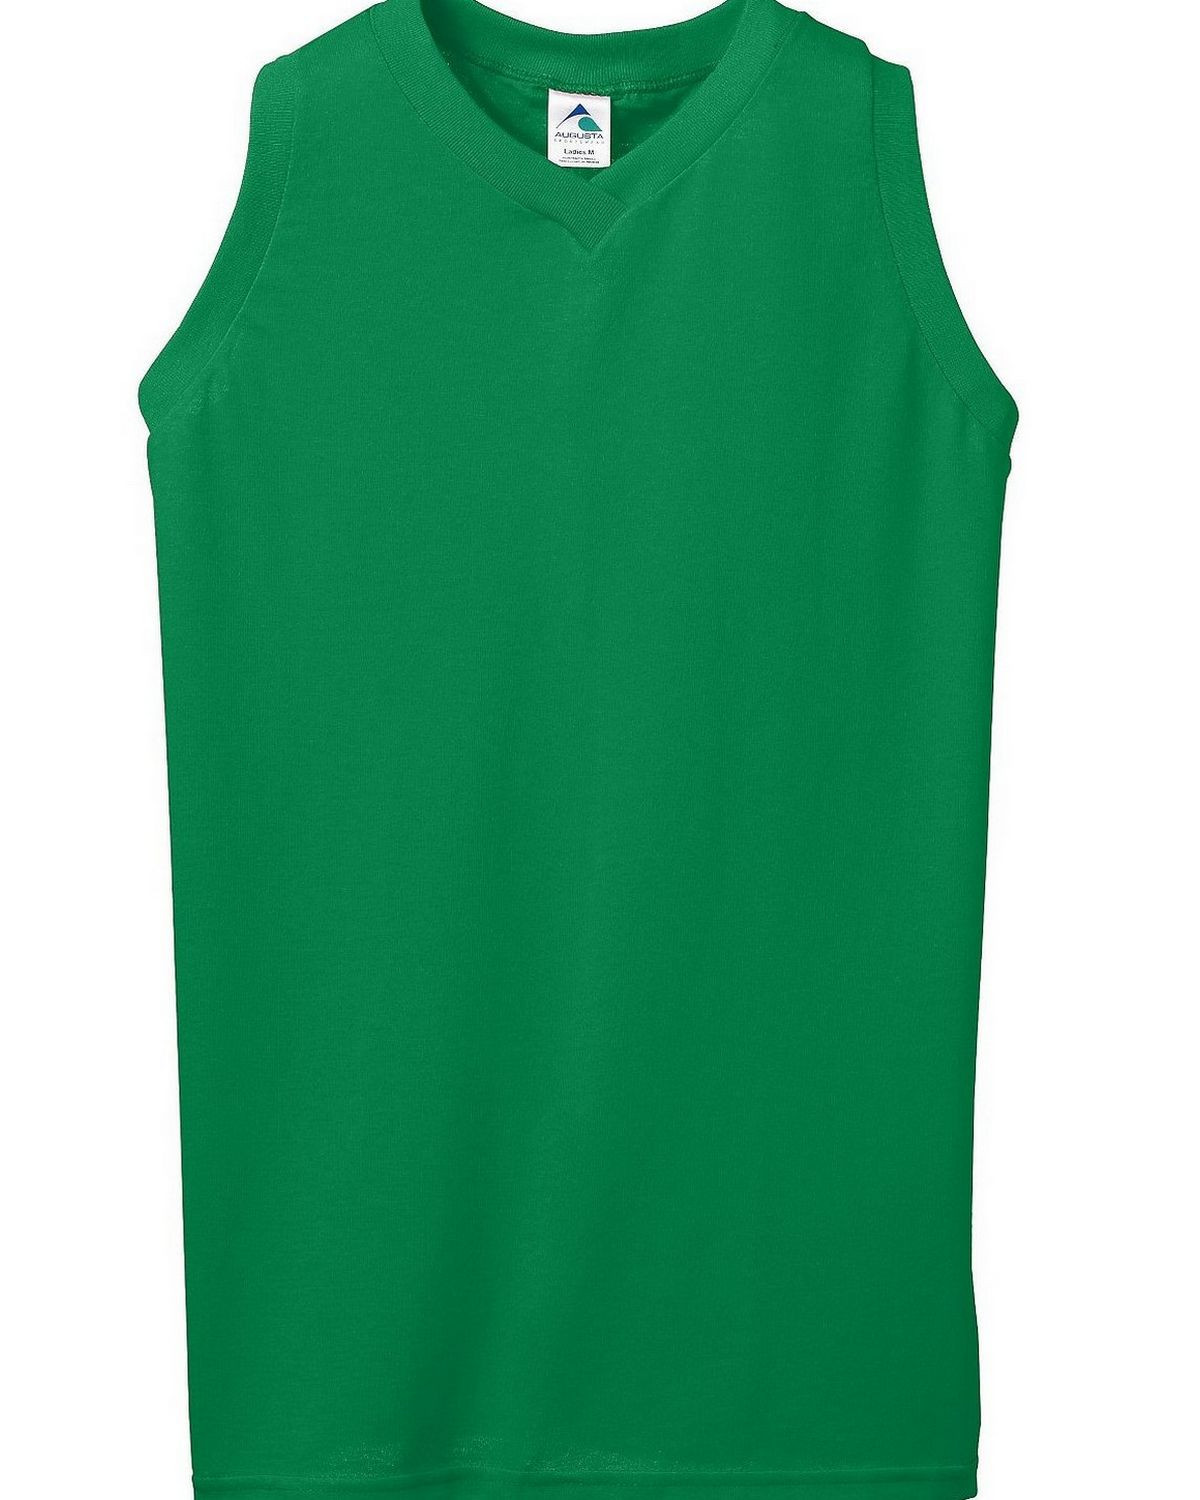 Augusta Sportswear 556 Women's Sleeveless V Neck Shirt - Kelly - S #sleeveless